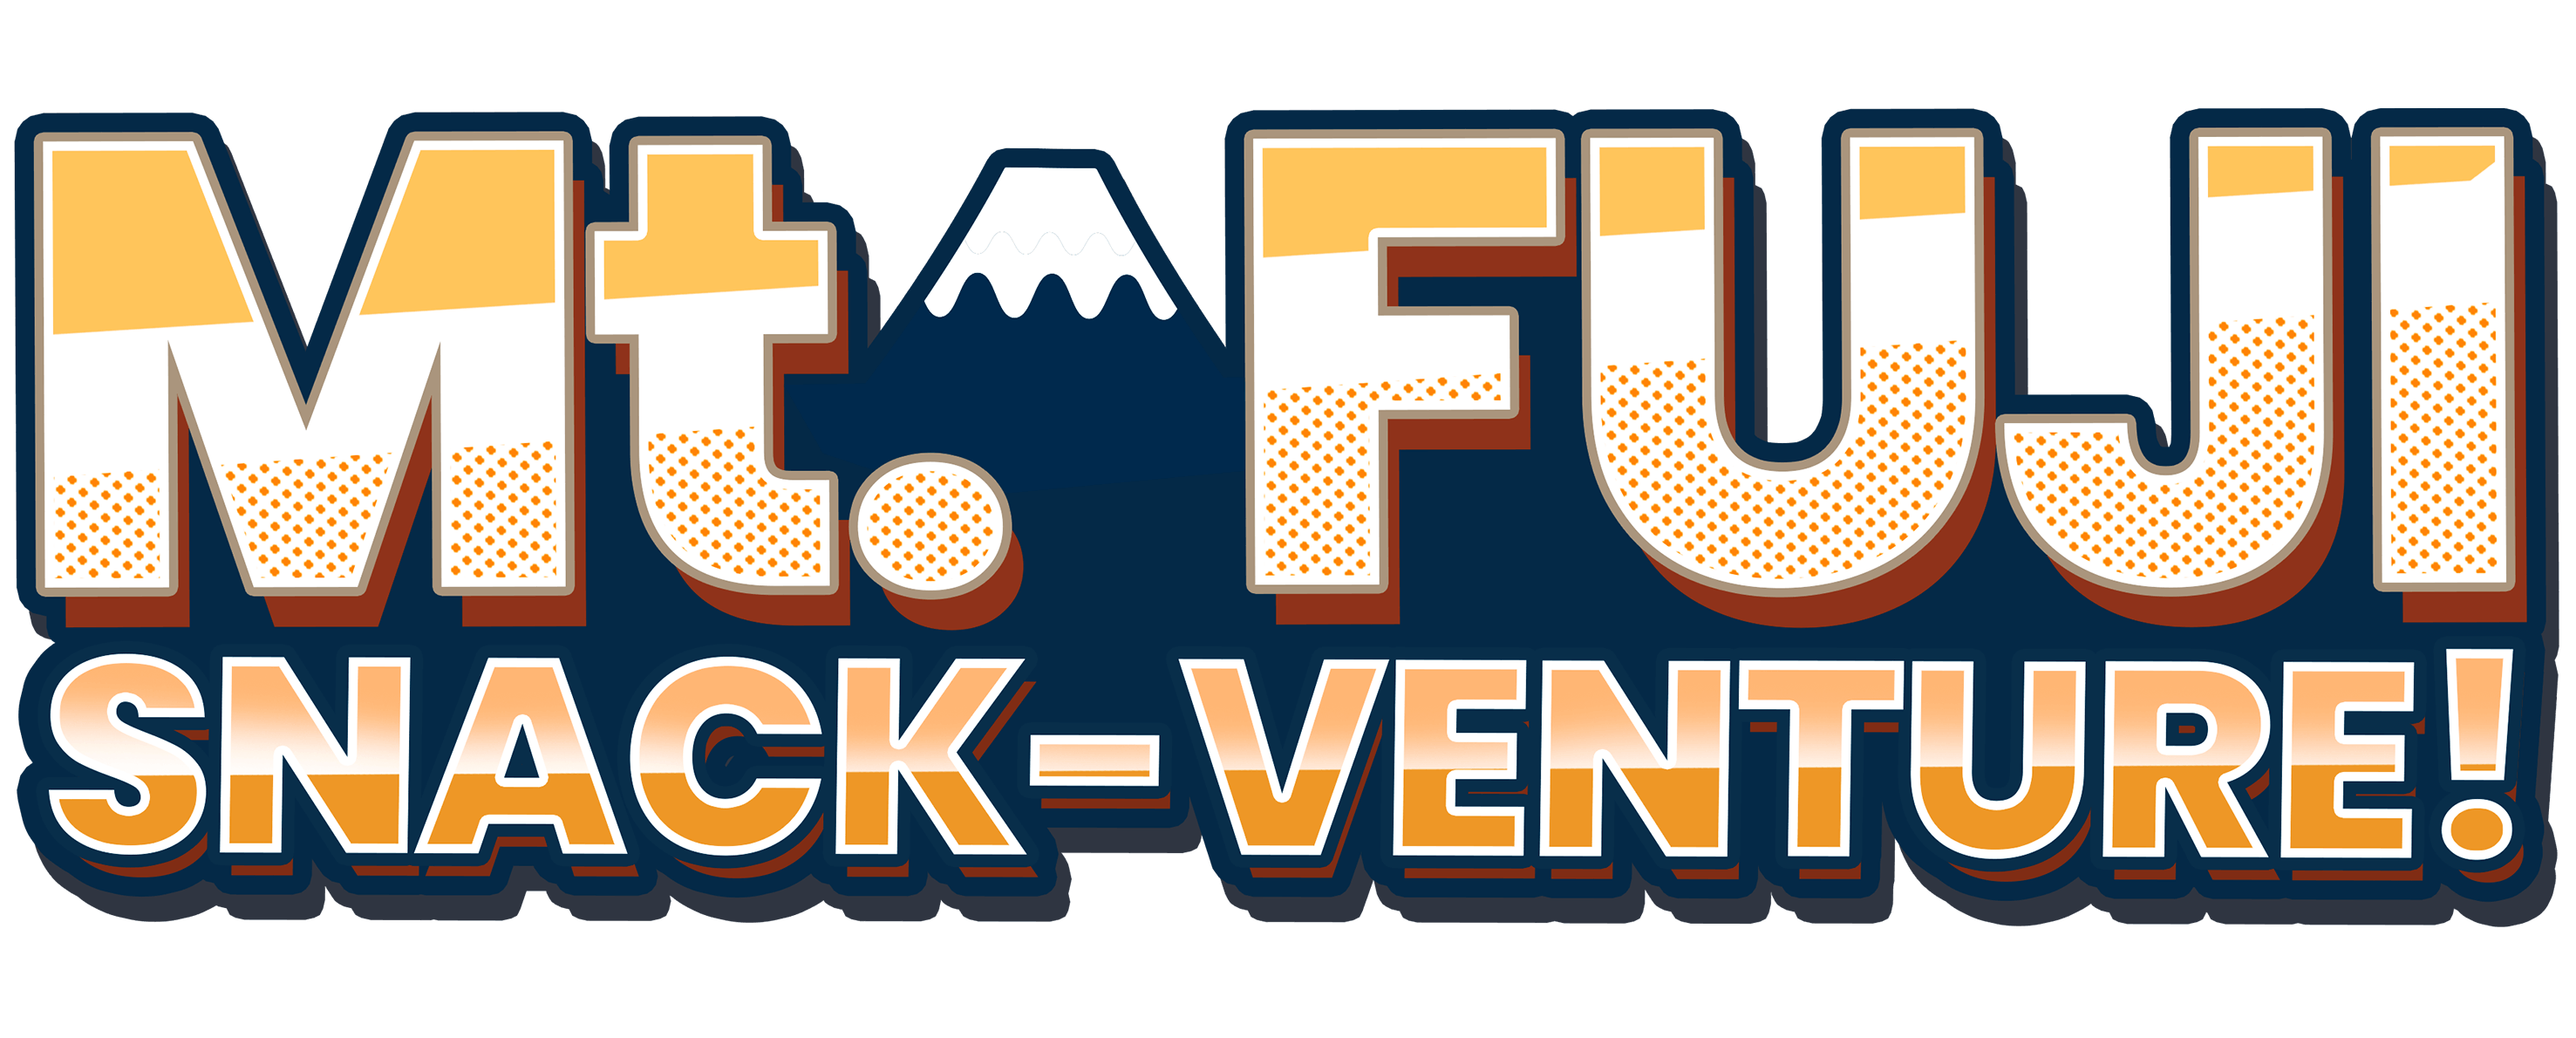 TokyoTreat's Mt. Fuji Snack-venture logo.